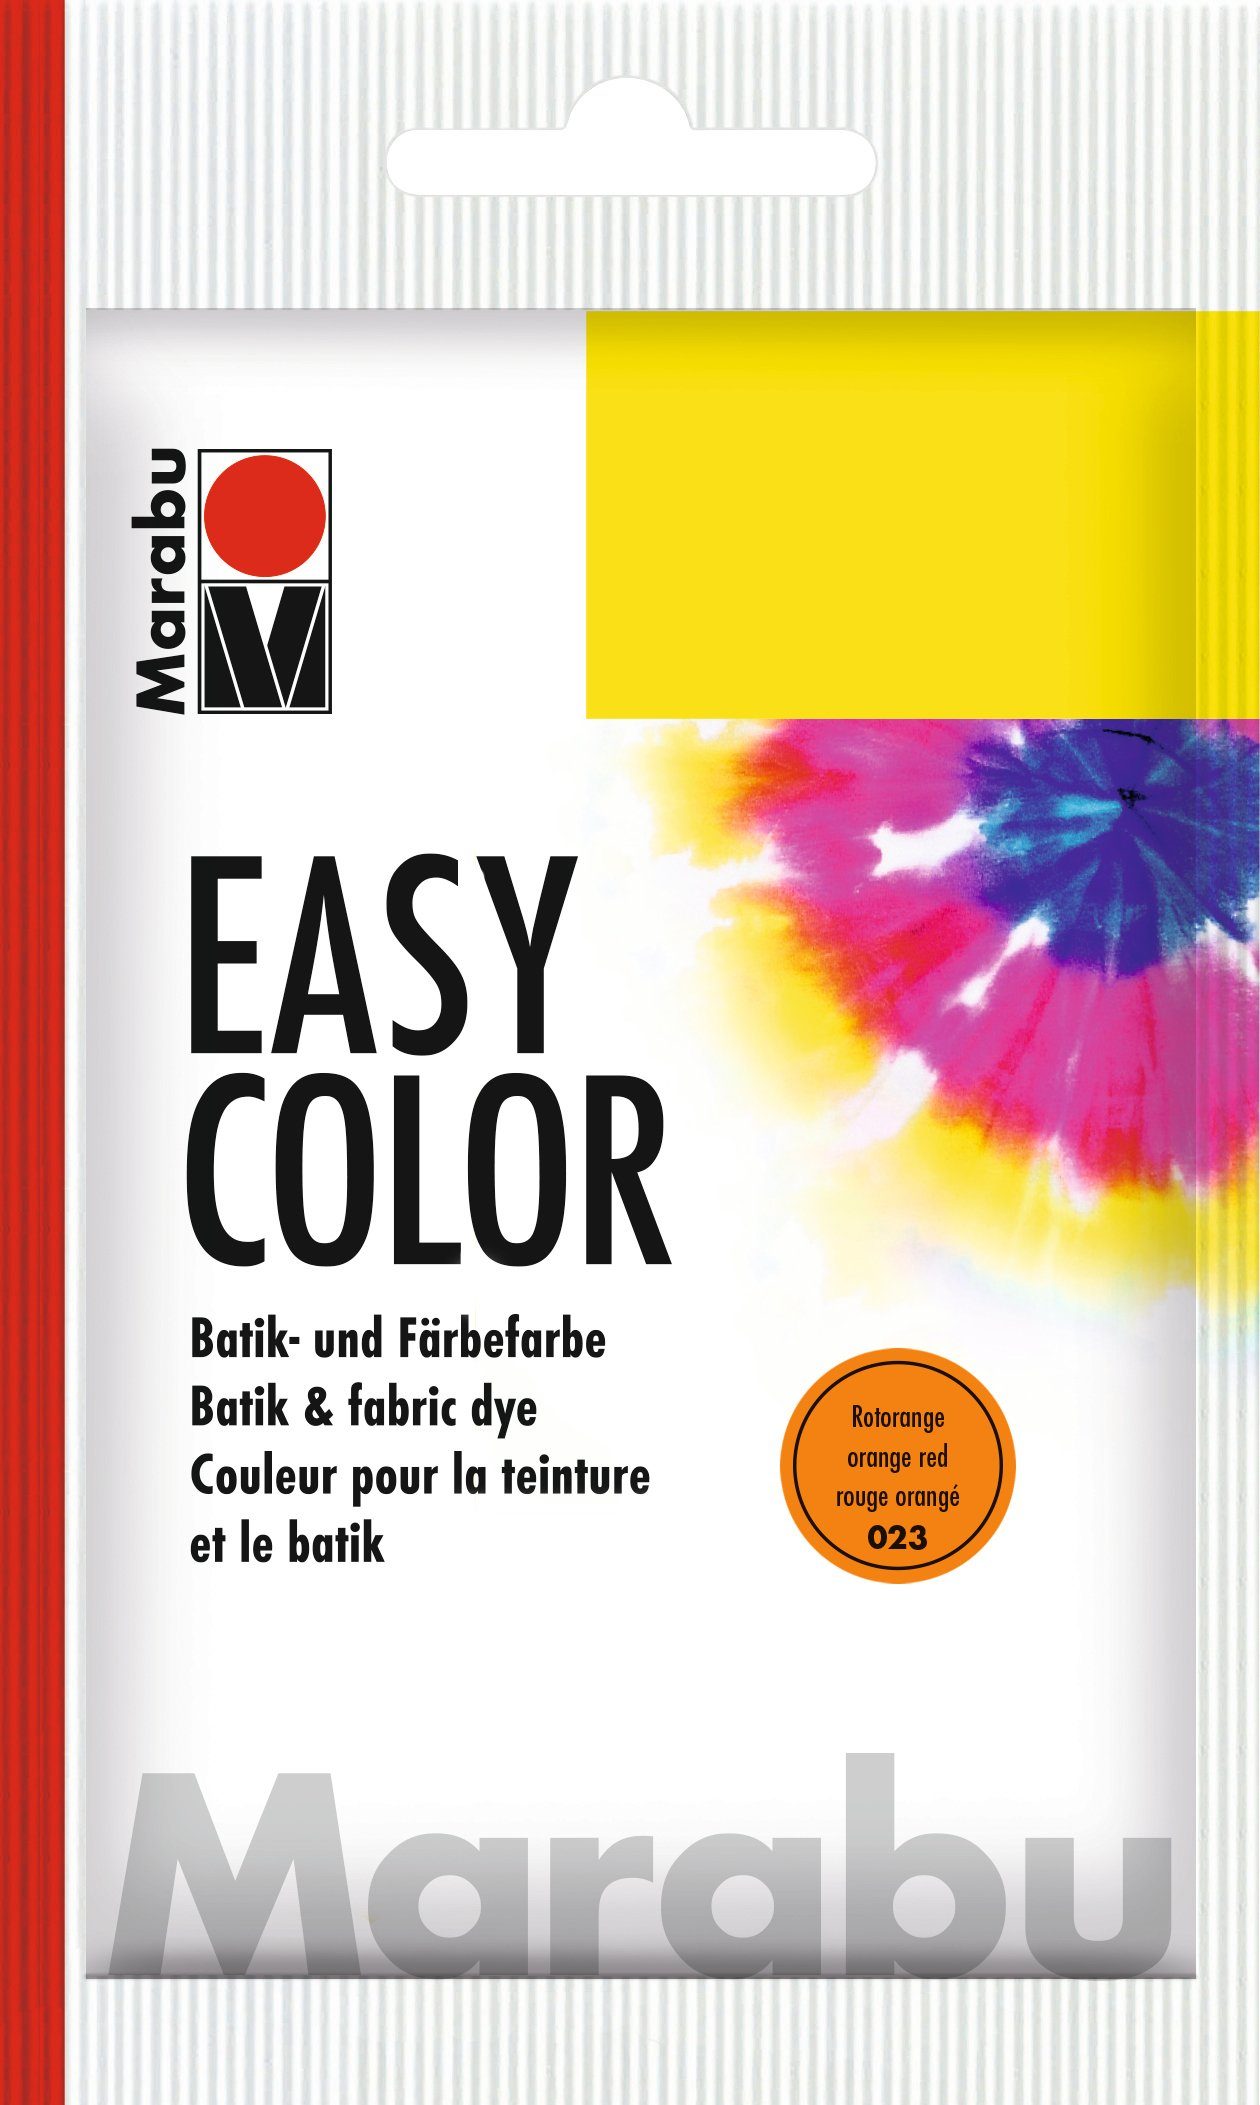 25 Marabu Rotorange Color, Bastelfarbe g Easy